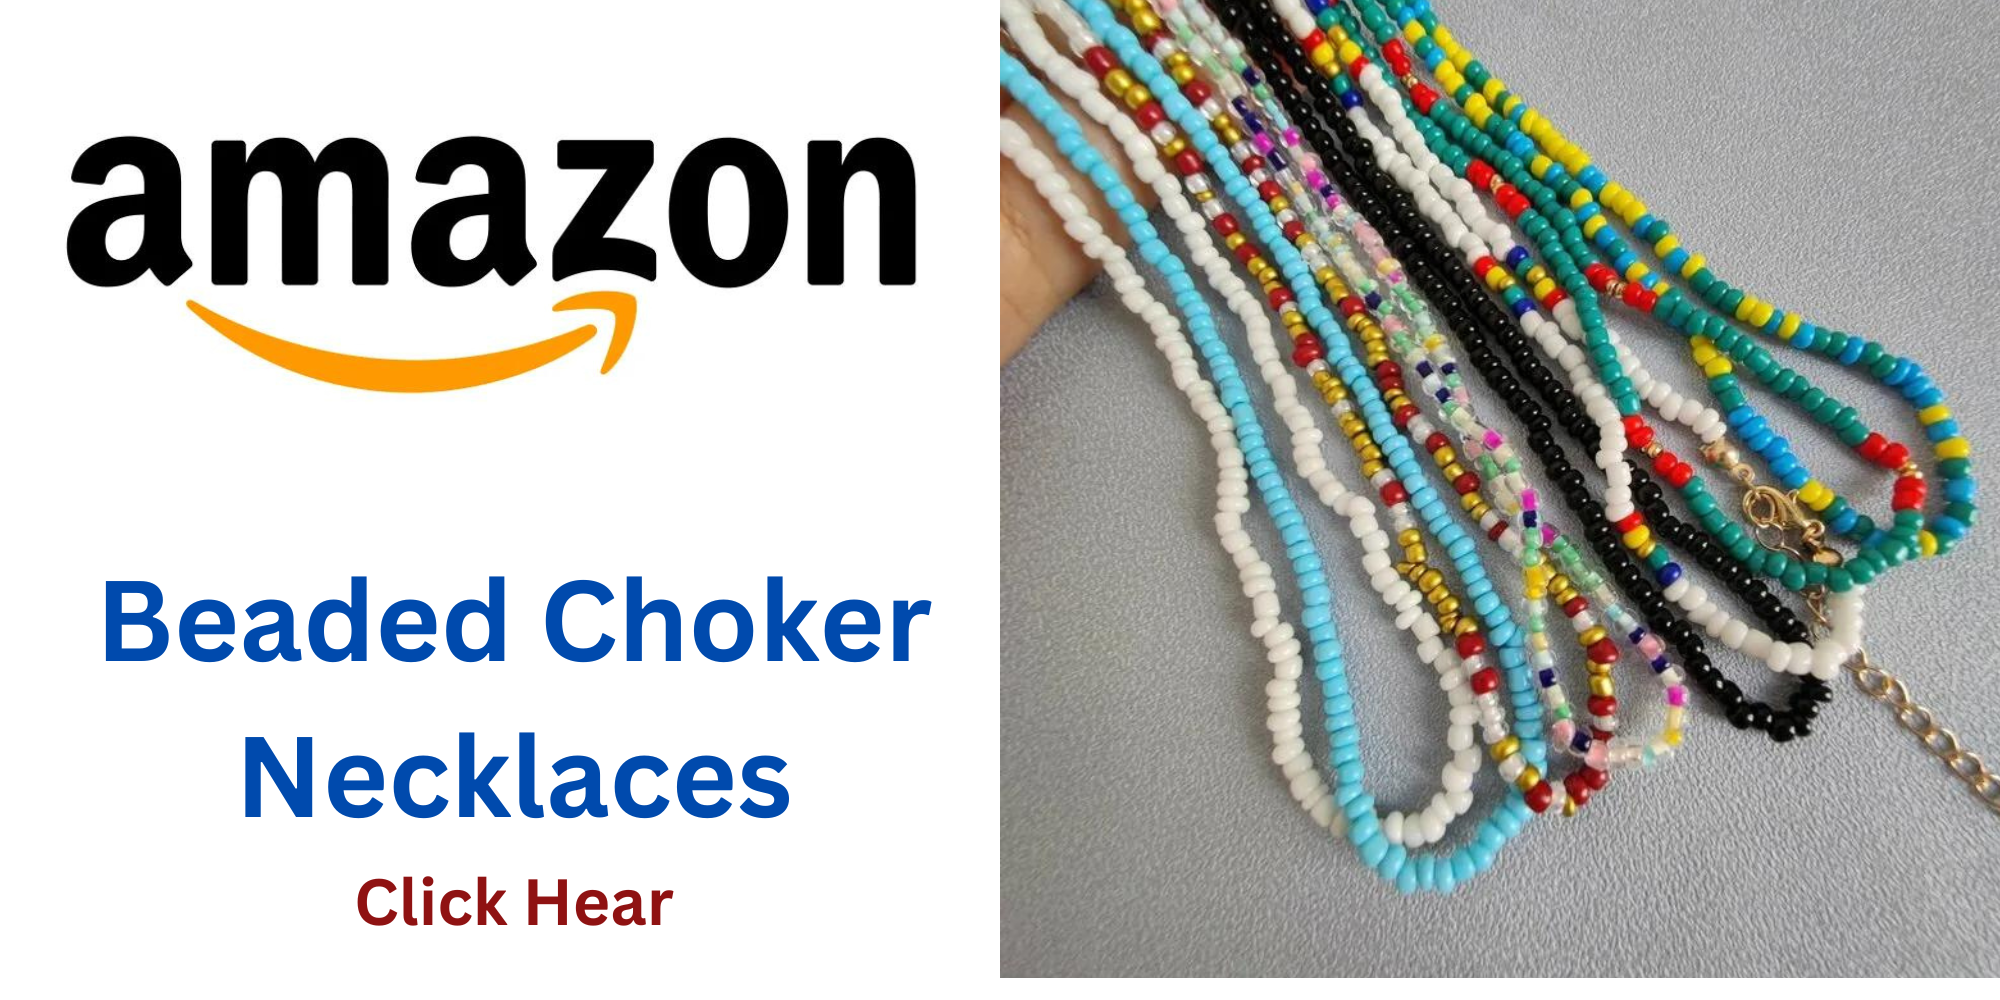 amazon  Beaded Choker Necklaces click hear to order